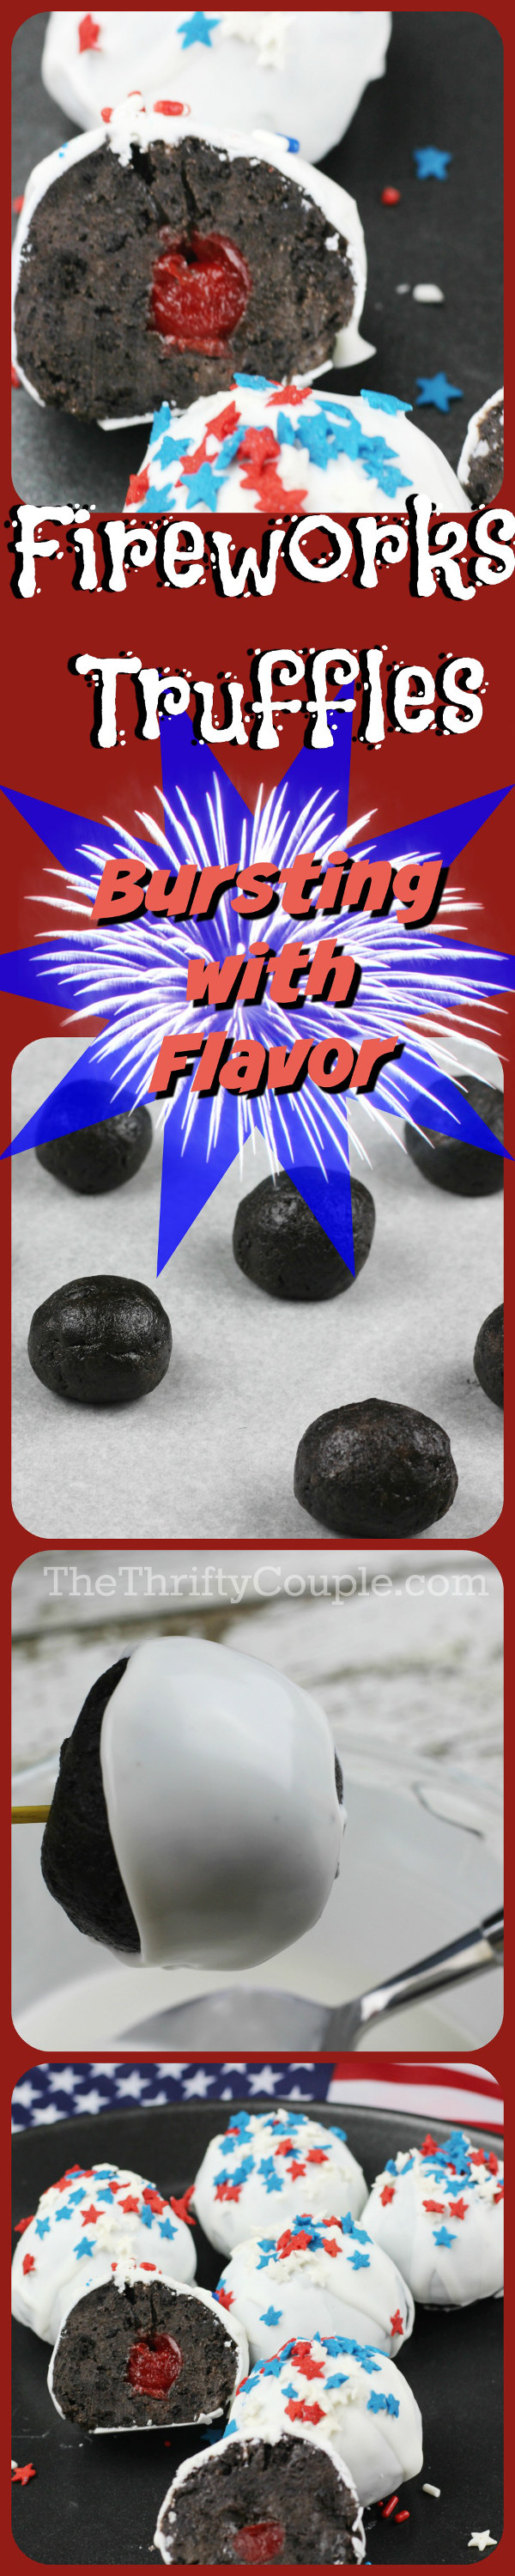 fireworks-truffles-bursting-with-flavor-hidden-cherry-4th-of-july-recipe-dessert